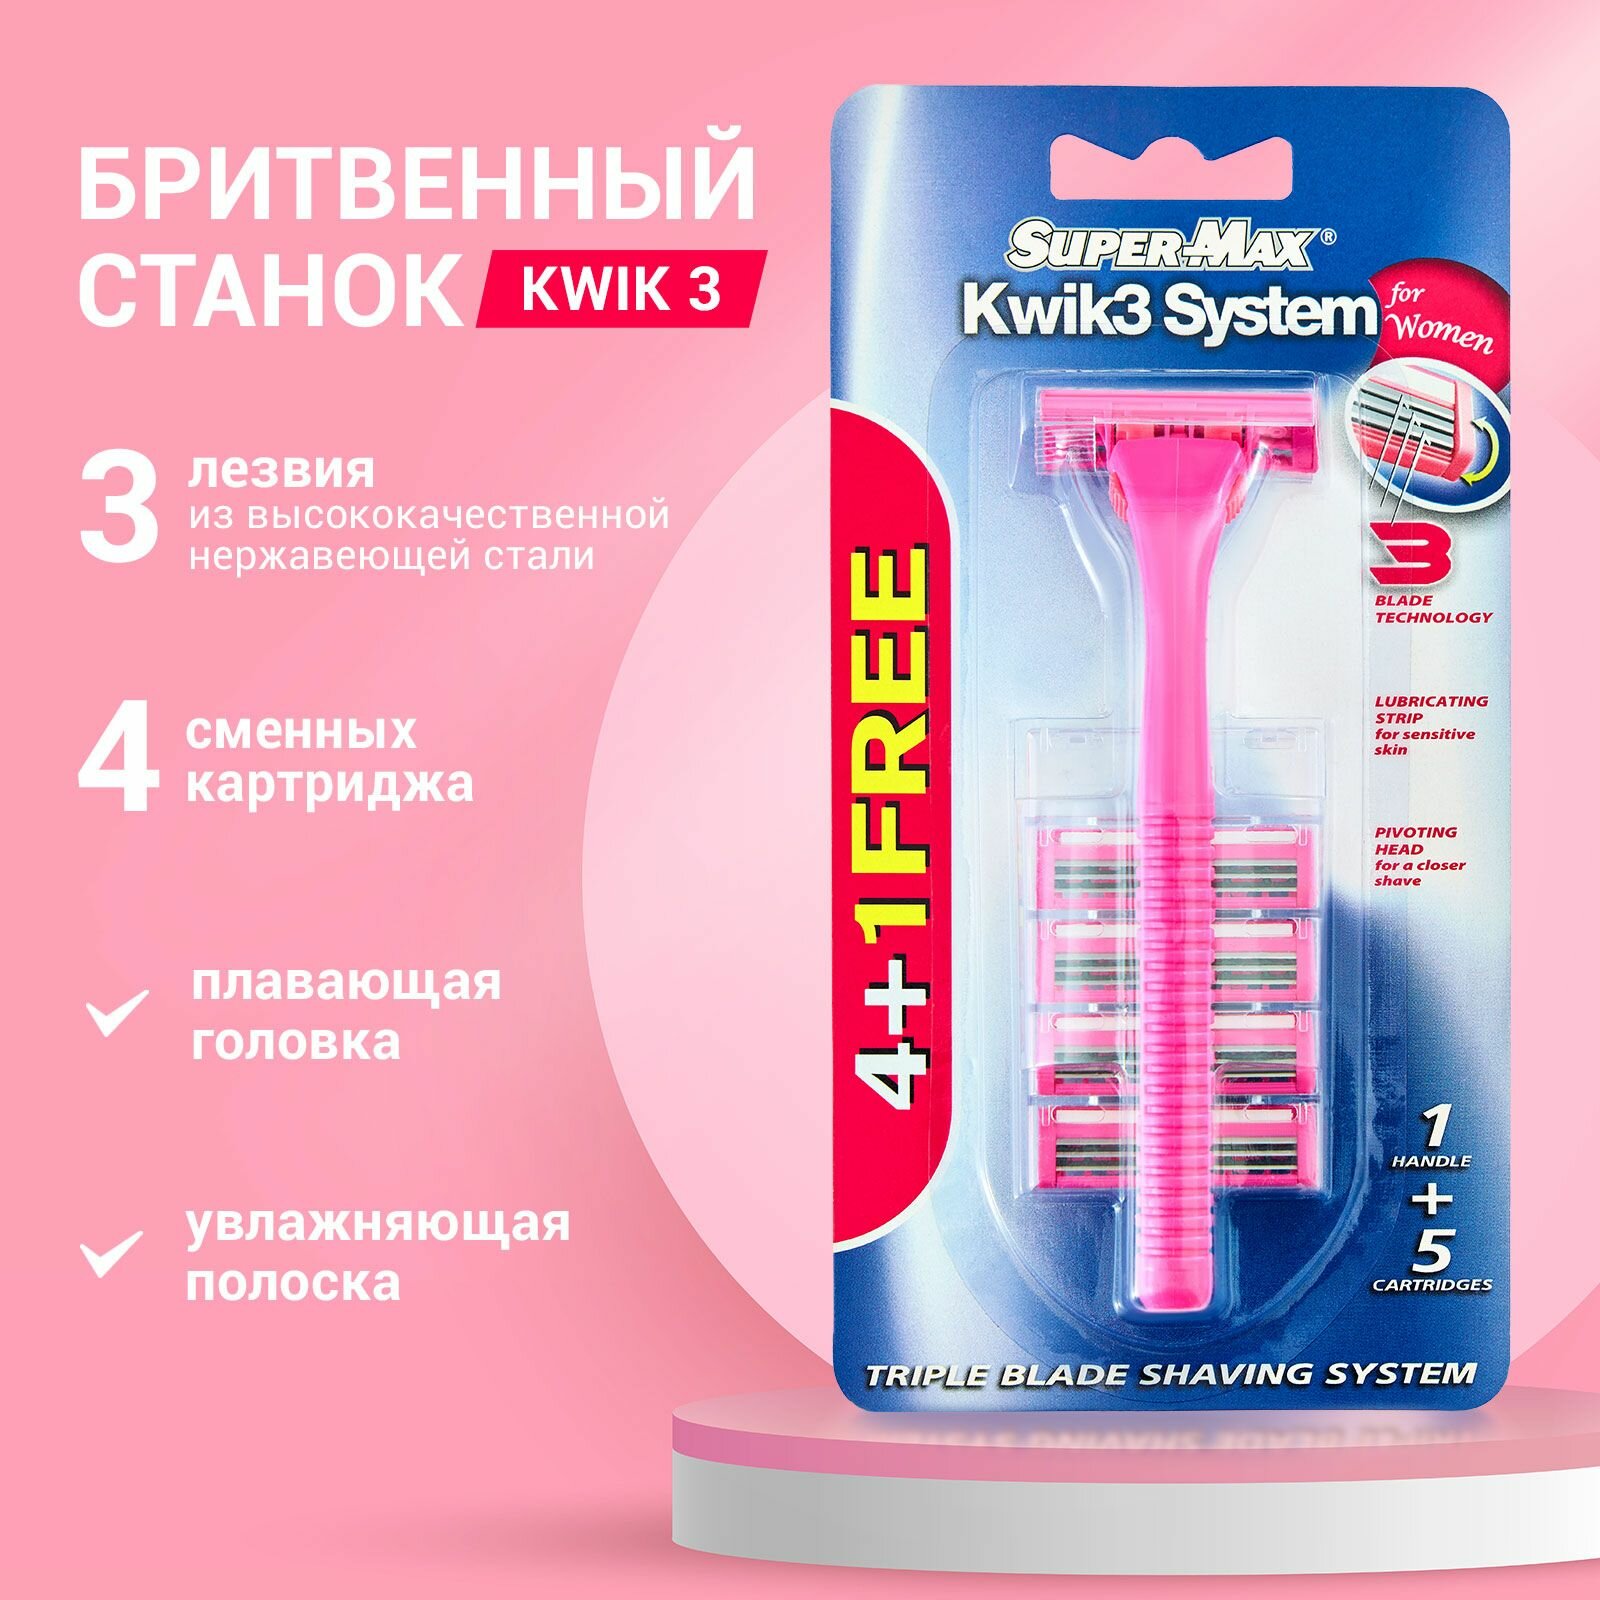 Super Max бритвенный станок Kwik 3 System for Women